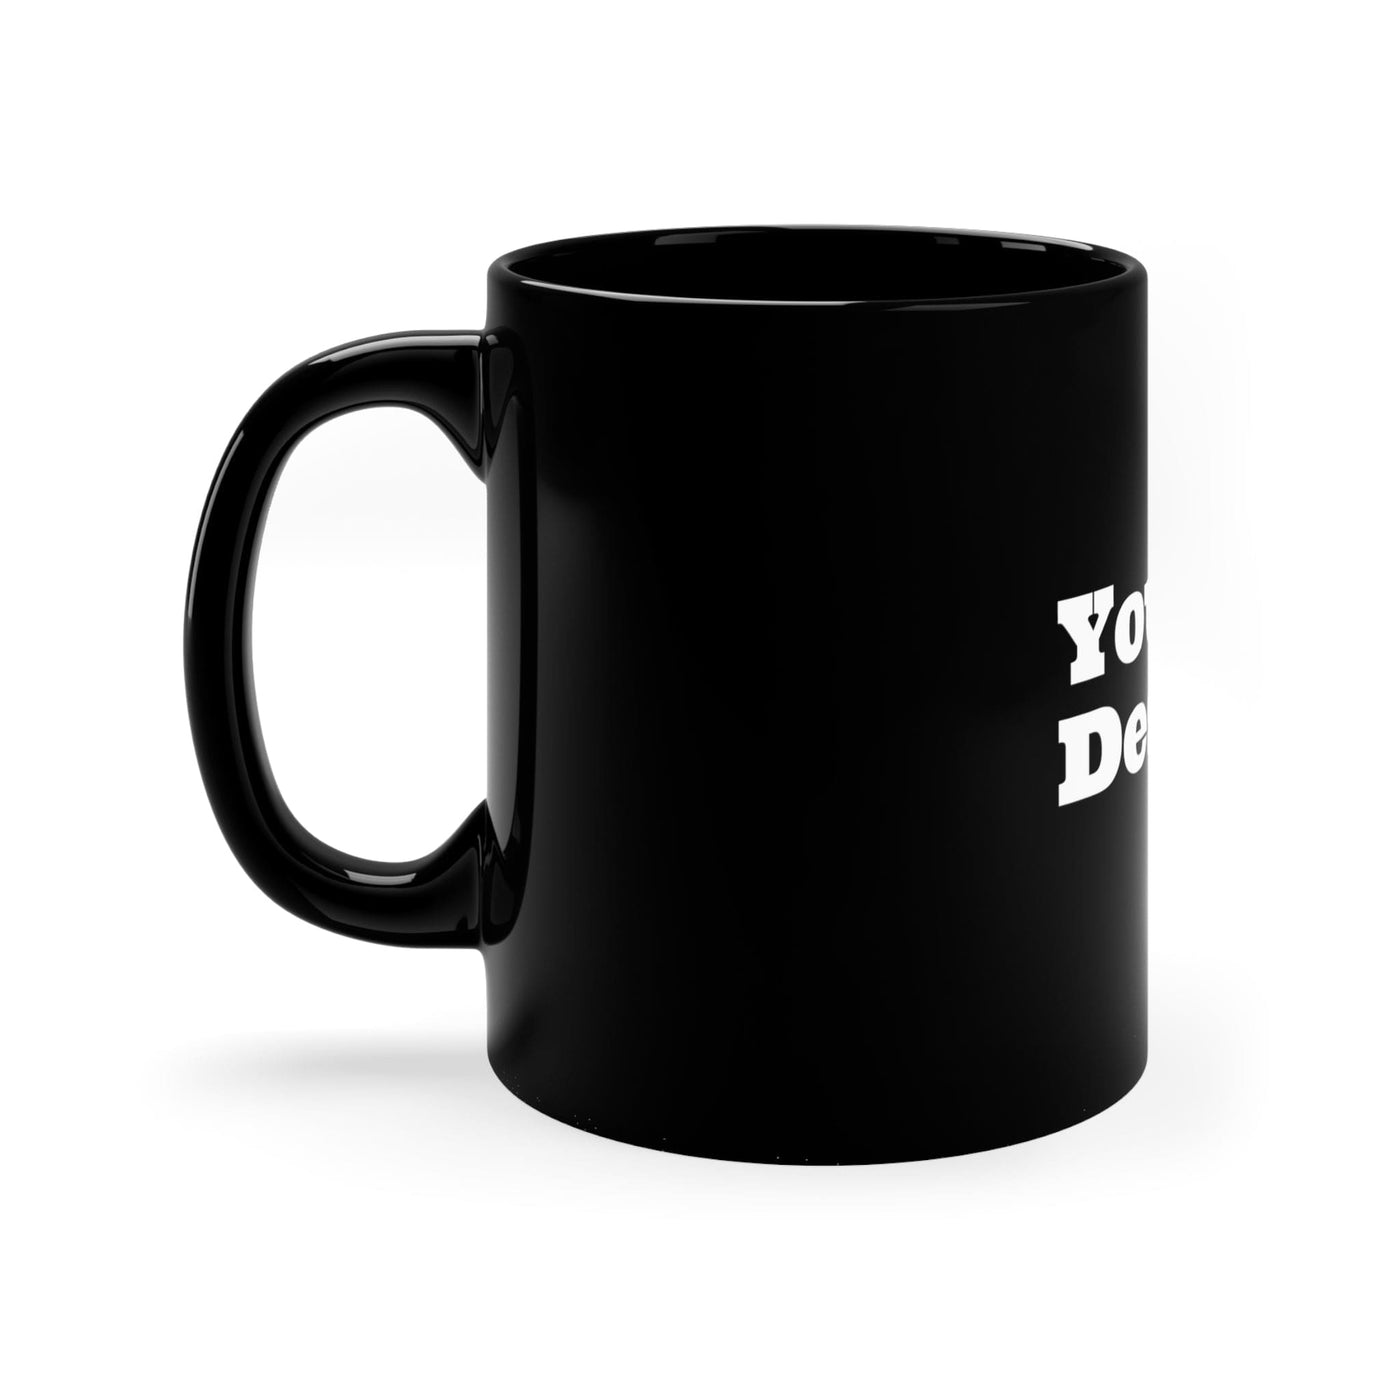 Custom Black Mug 11oz - Decorative | Ceramic Mugs